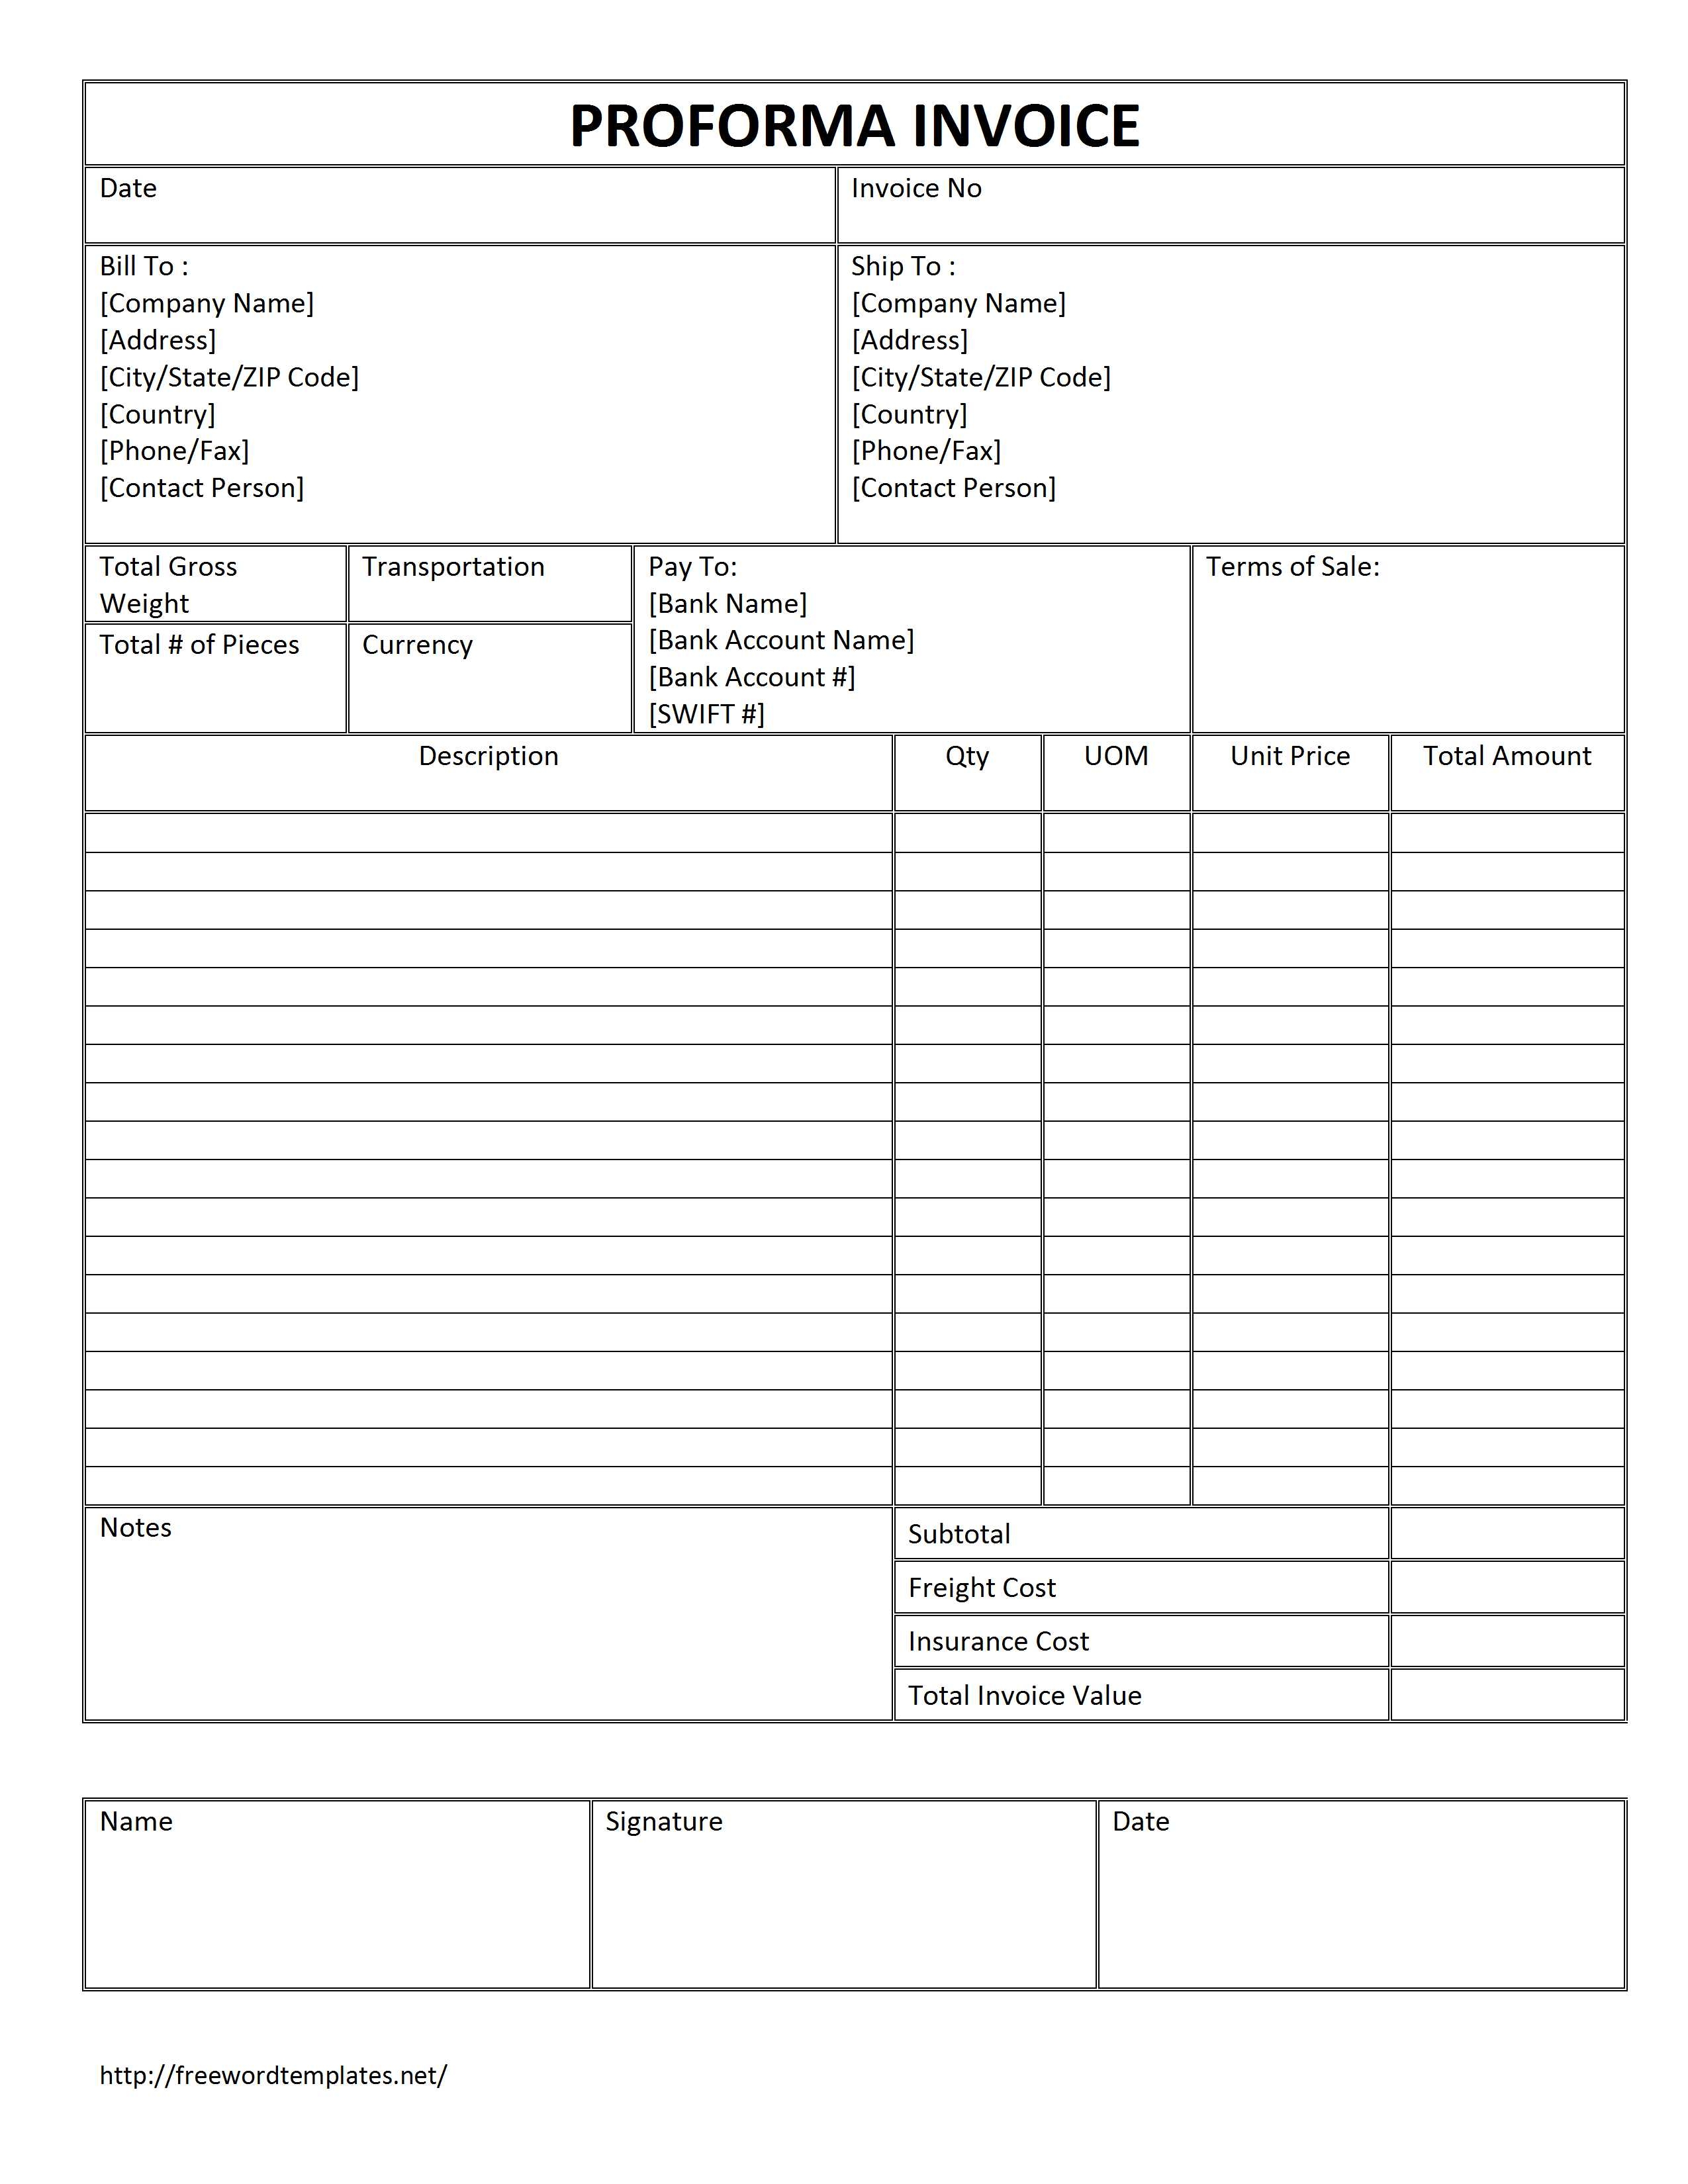 proforma invoice word ups commercial invoice template excel pdf proforma invoice template pdf